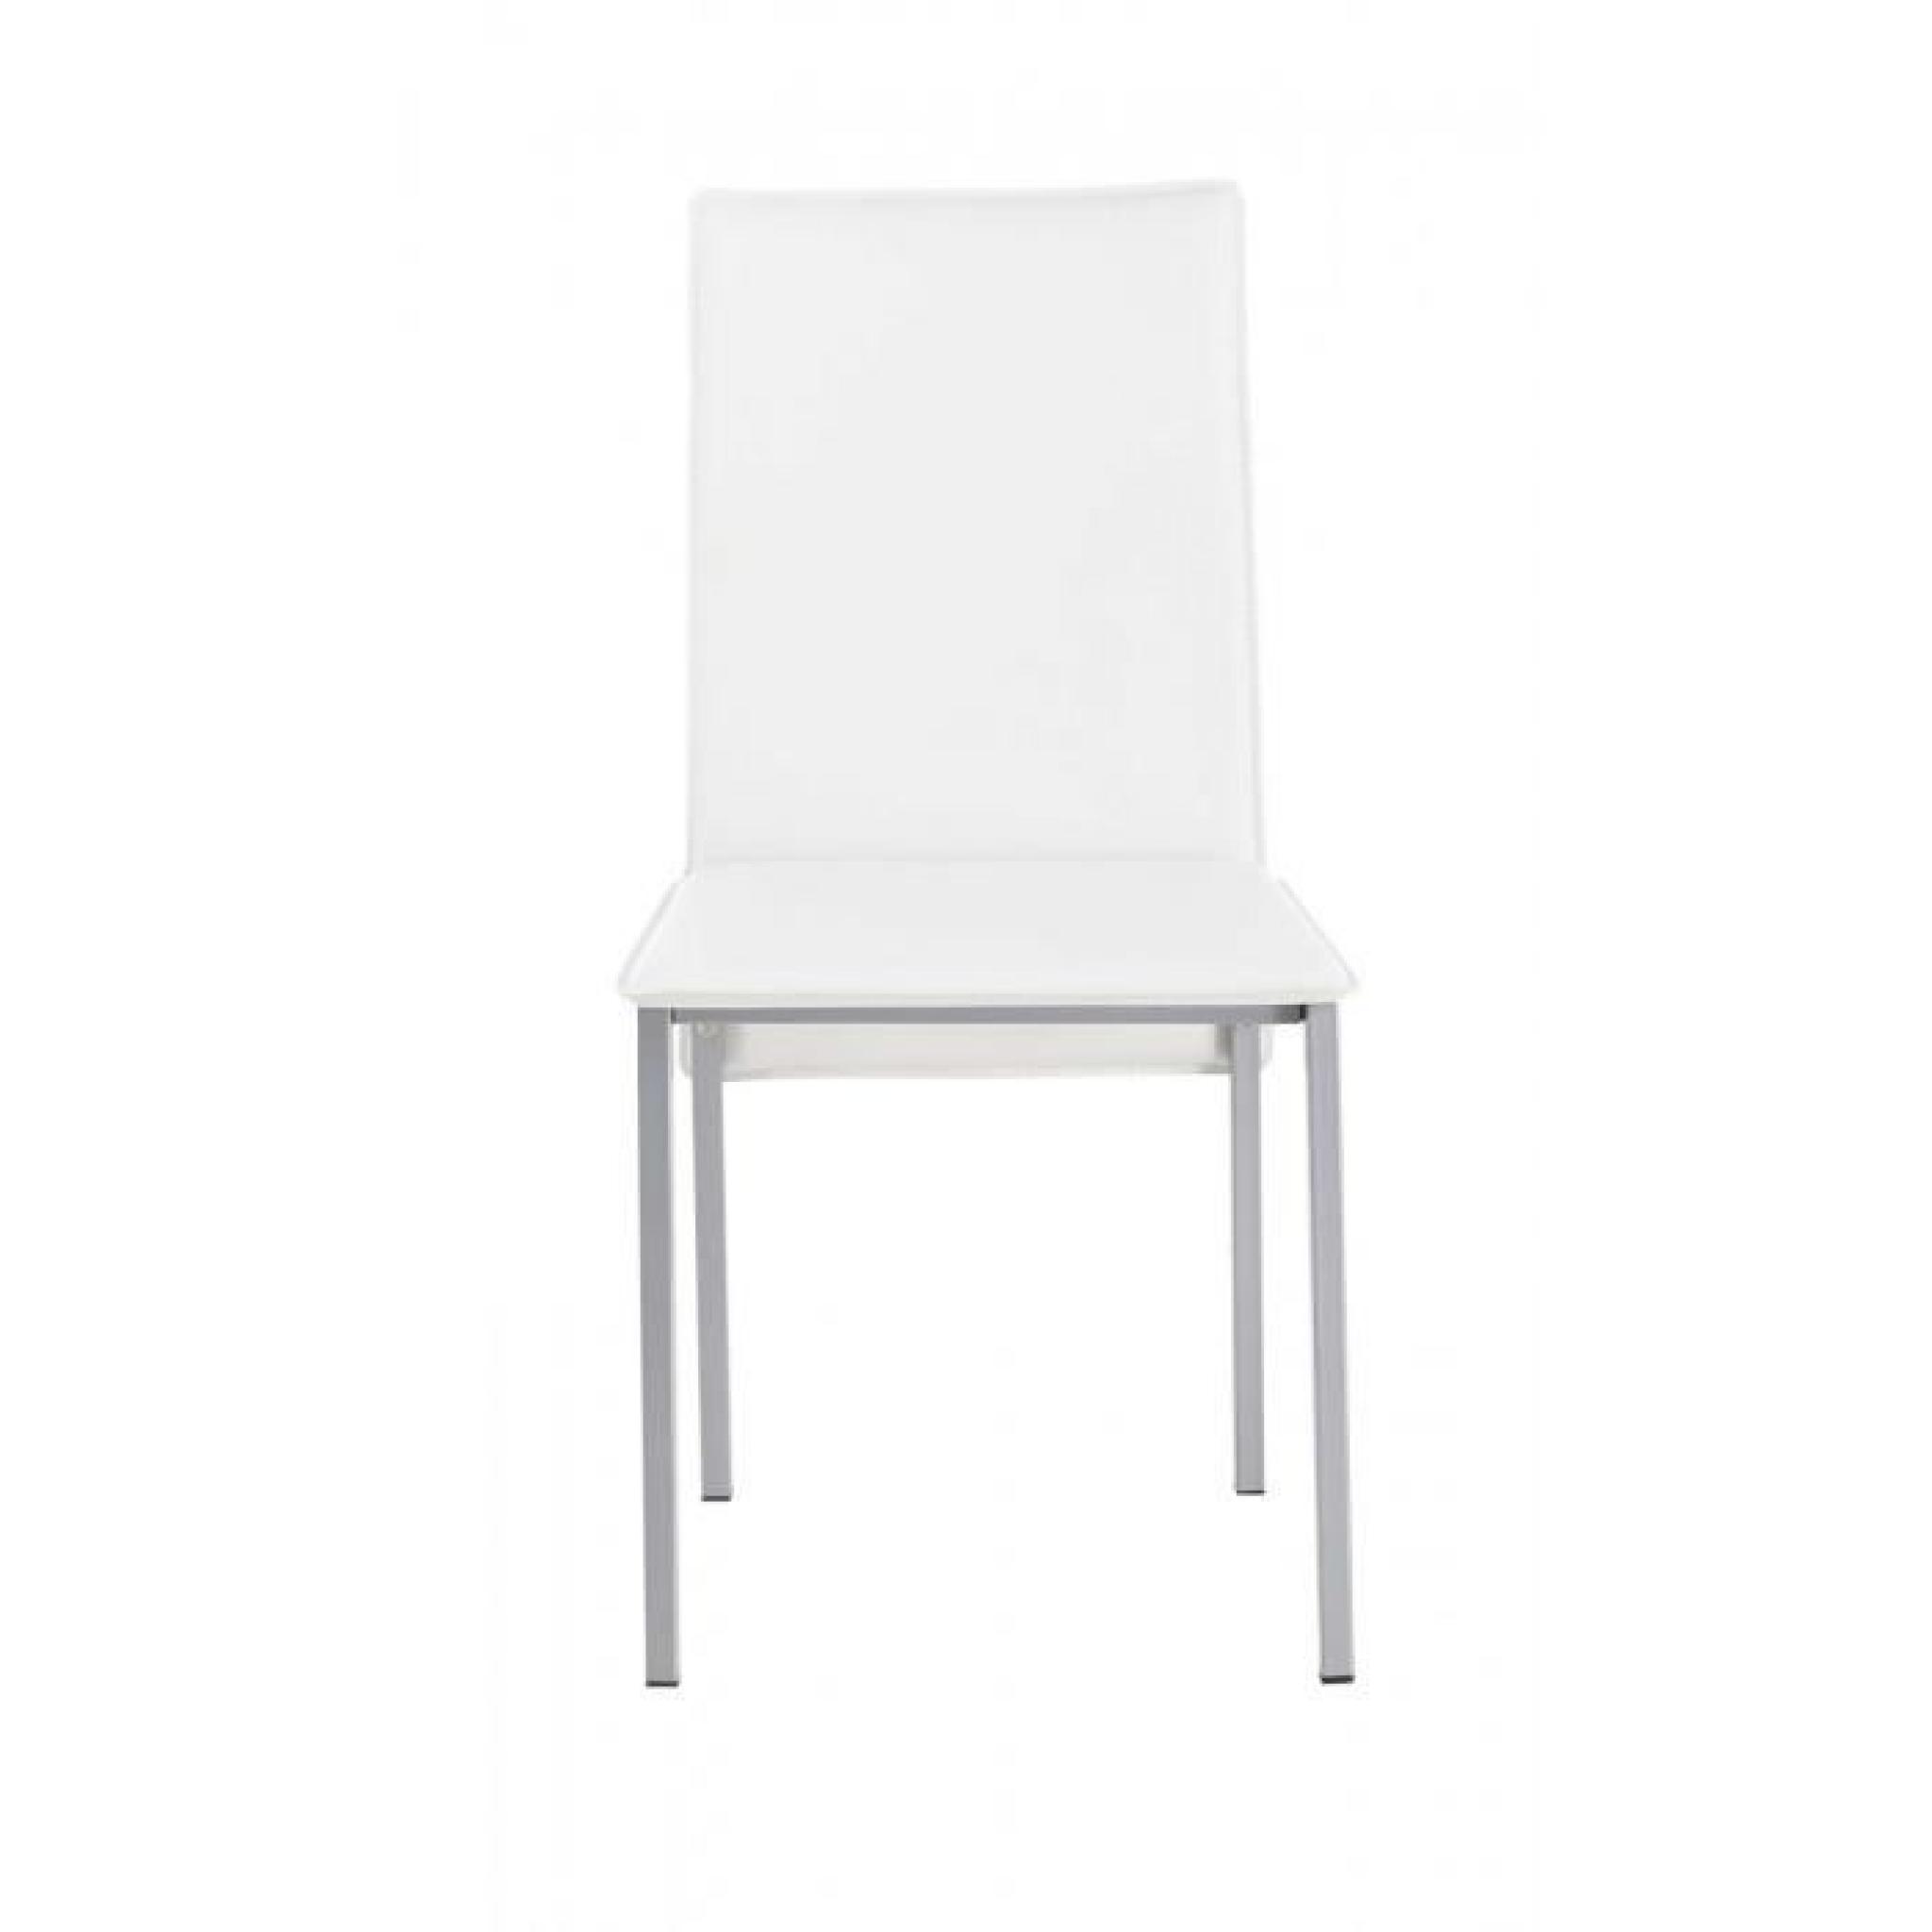 2x Chaise PU blanc Ines - Id'Click